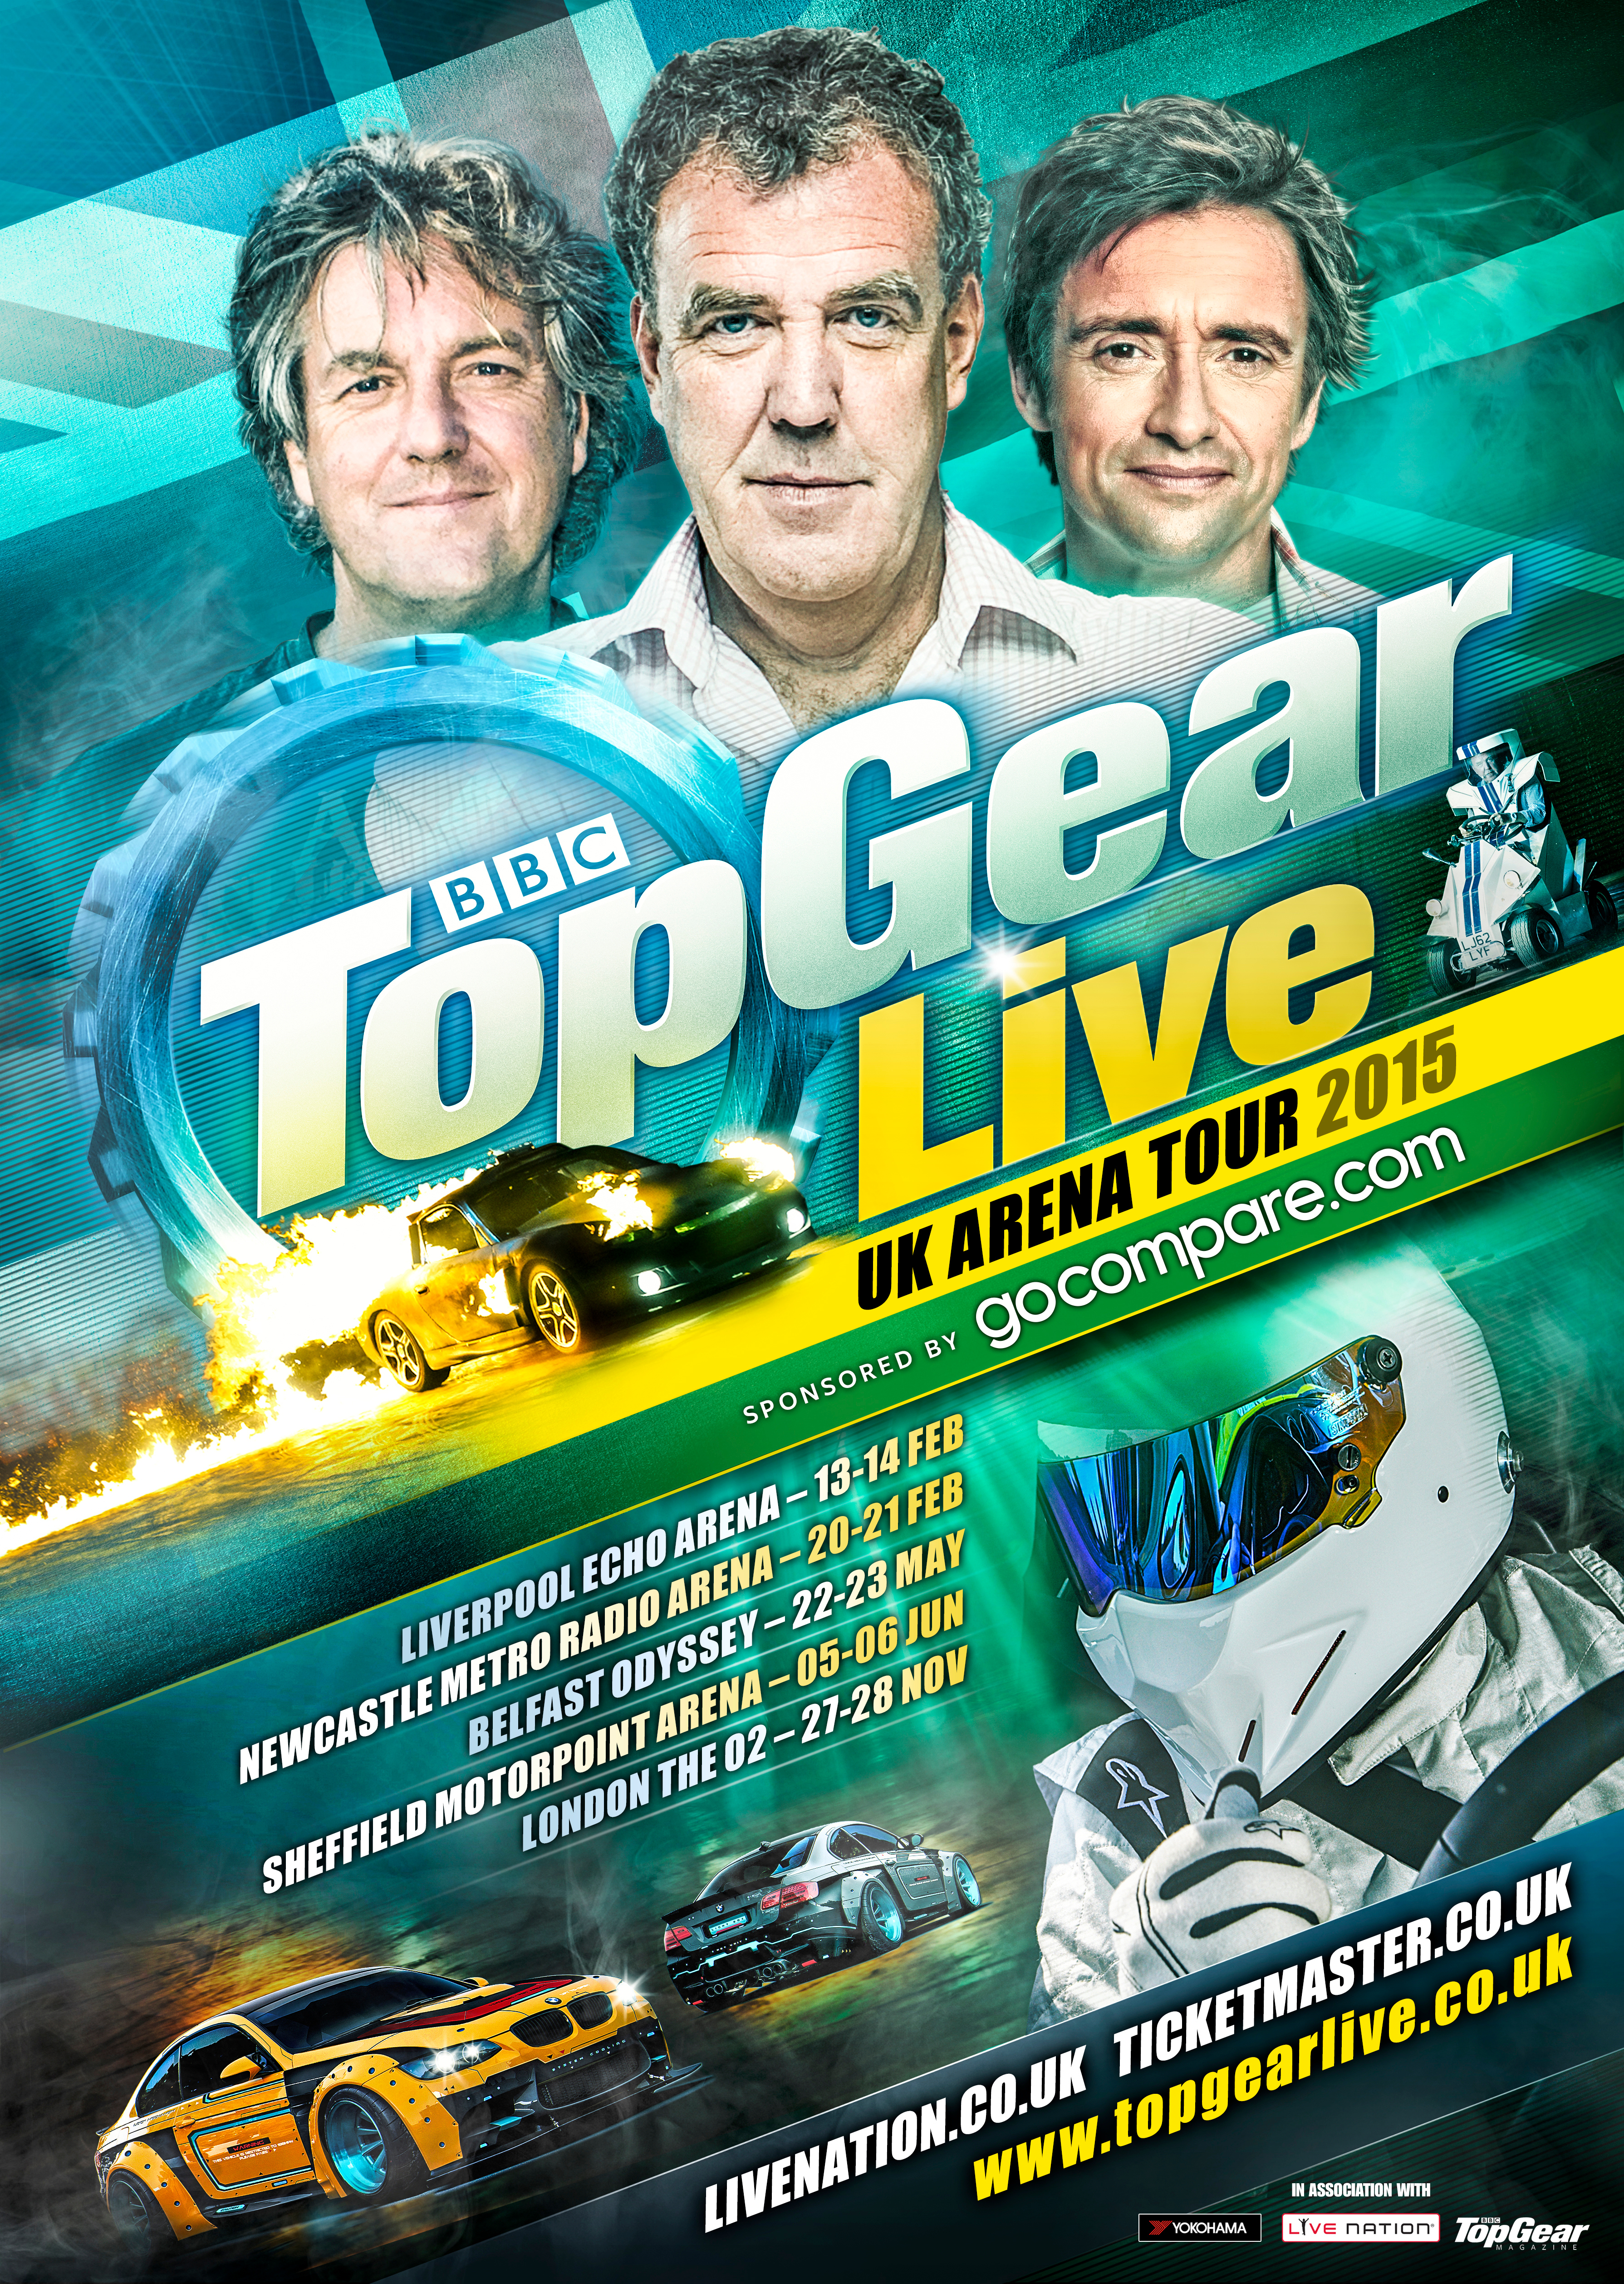 Is Yokohama’s Top Gear Live sponsorship in doubt after Clarkson dismissal?